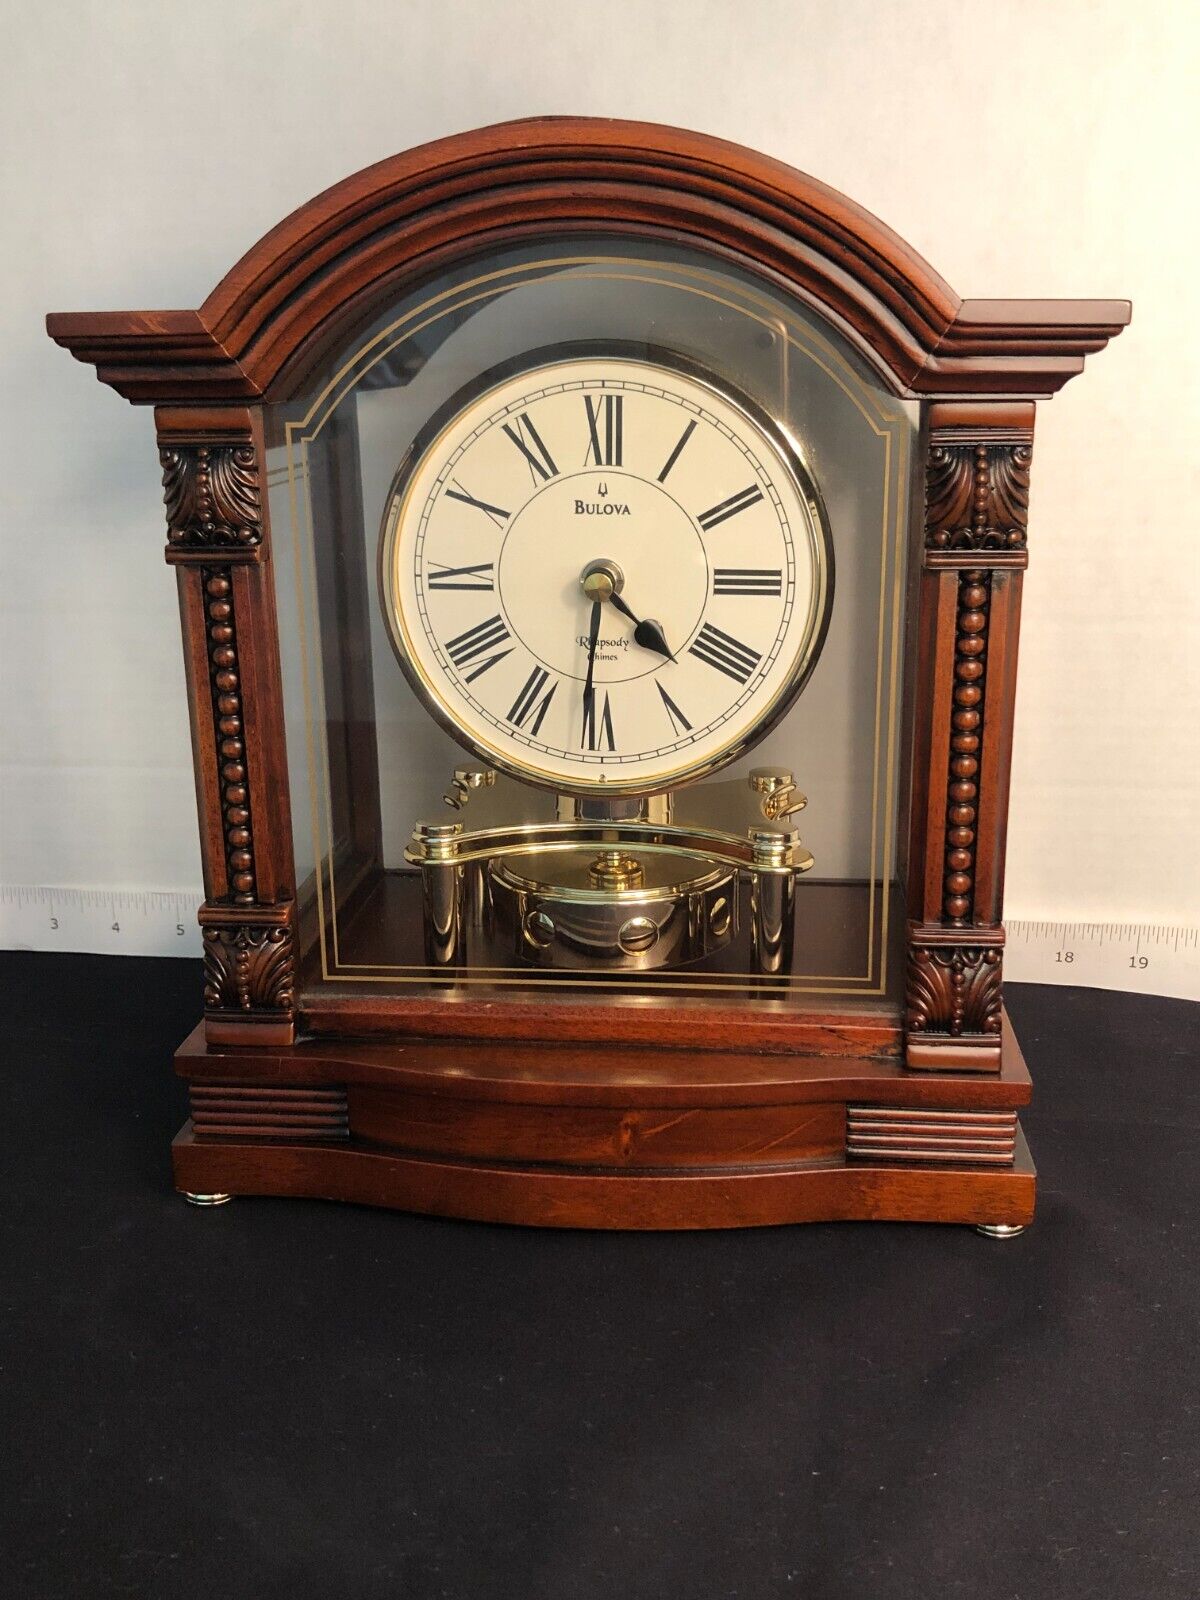 BULOVA Mantel Clock in Classic Walnut Wood Finish and Shiny Polished Brass parts